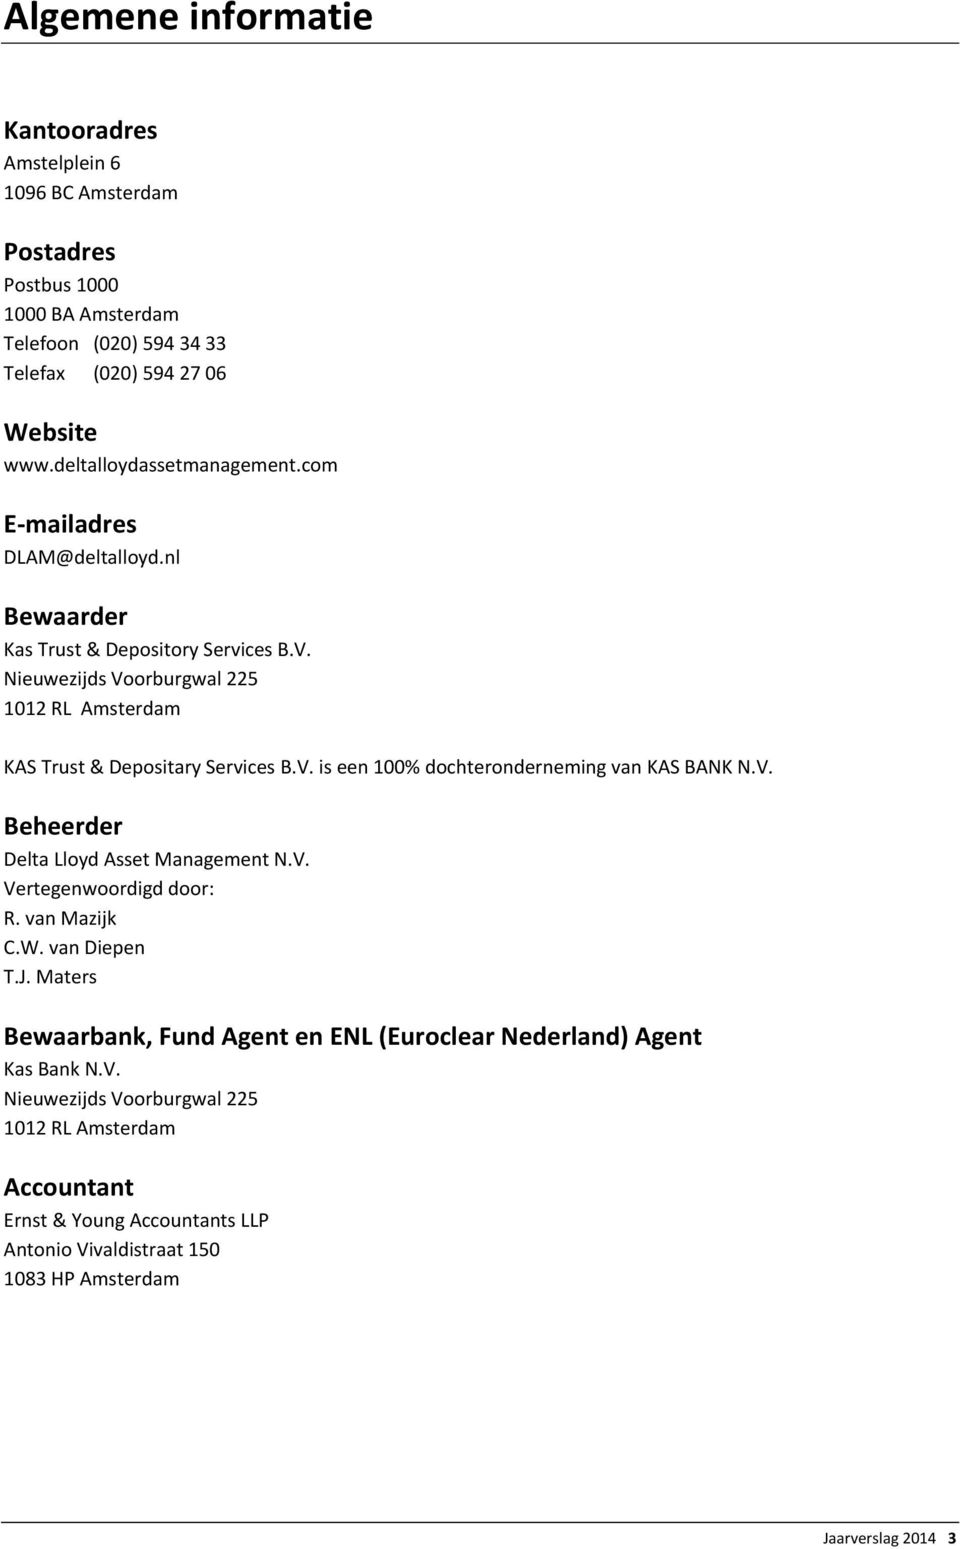 Nieuwezijds Voorburgwal 225 1012 RL Amsterdam KAS Trust & Depositary Services B.V. is een 100% dochteronderneming van KAS BANK N.V. Beheerder Delta Lloyd Asset Management N.V. Vertegenwoordigd door: R.